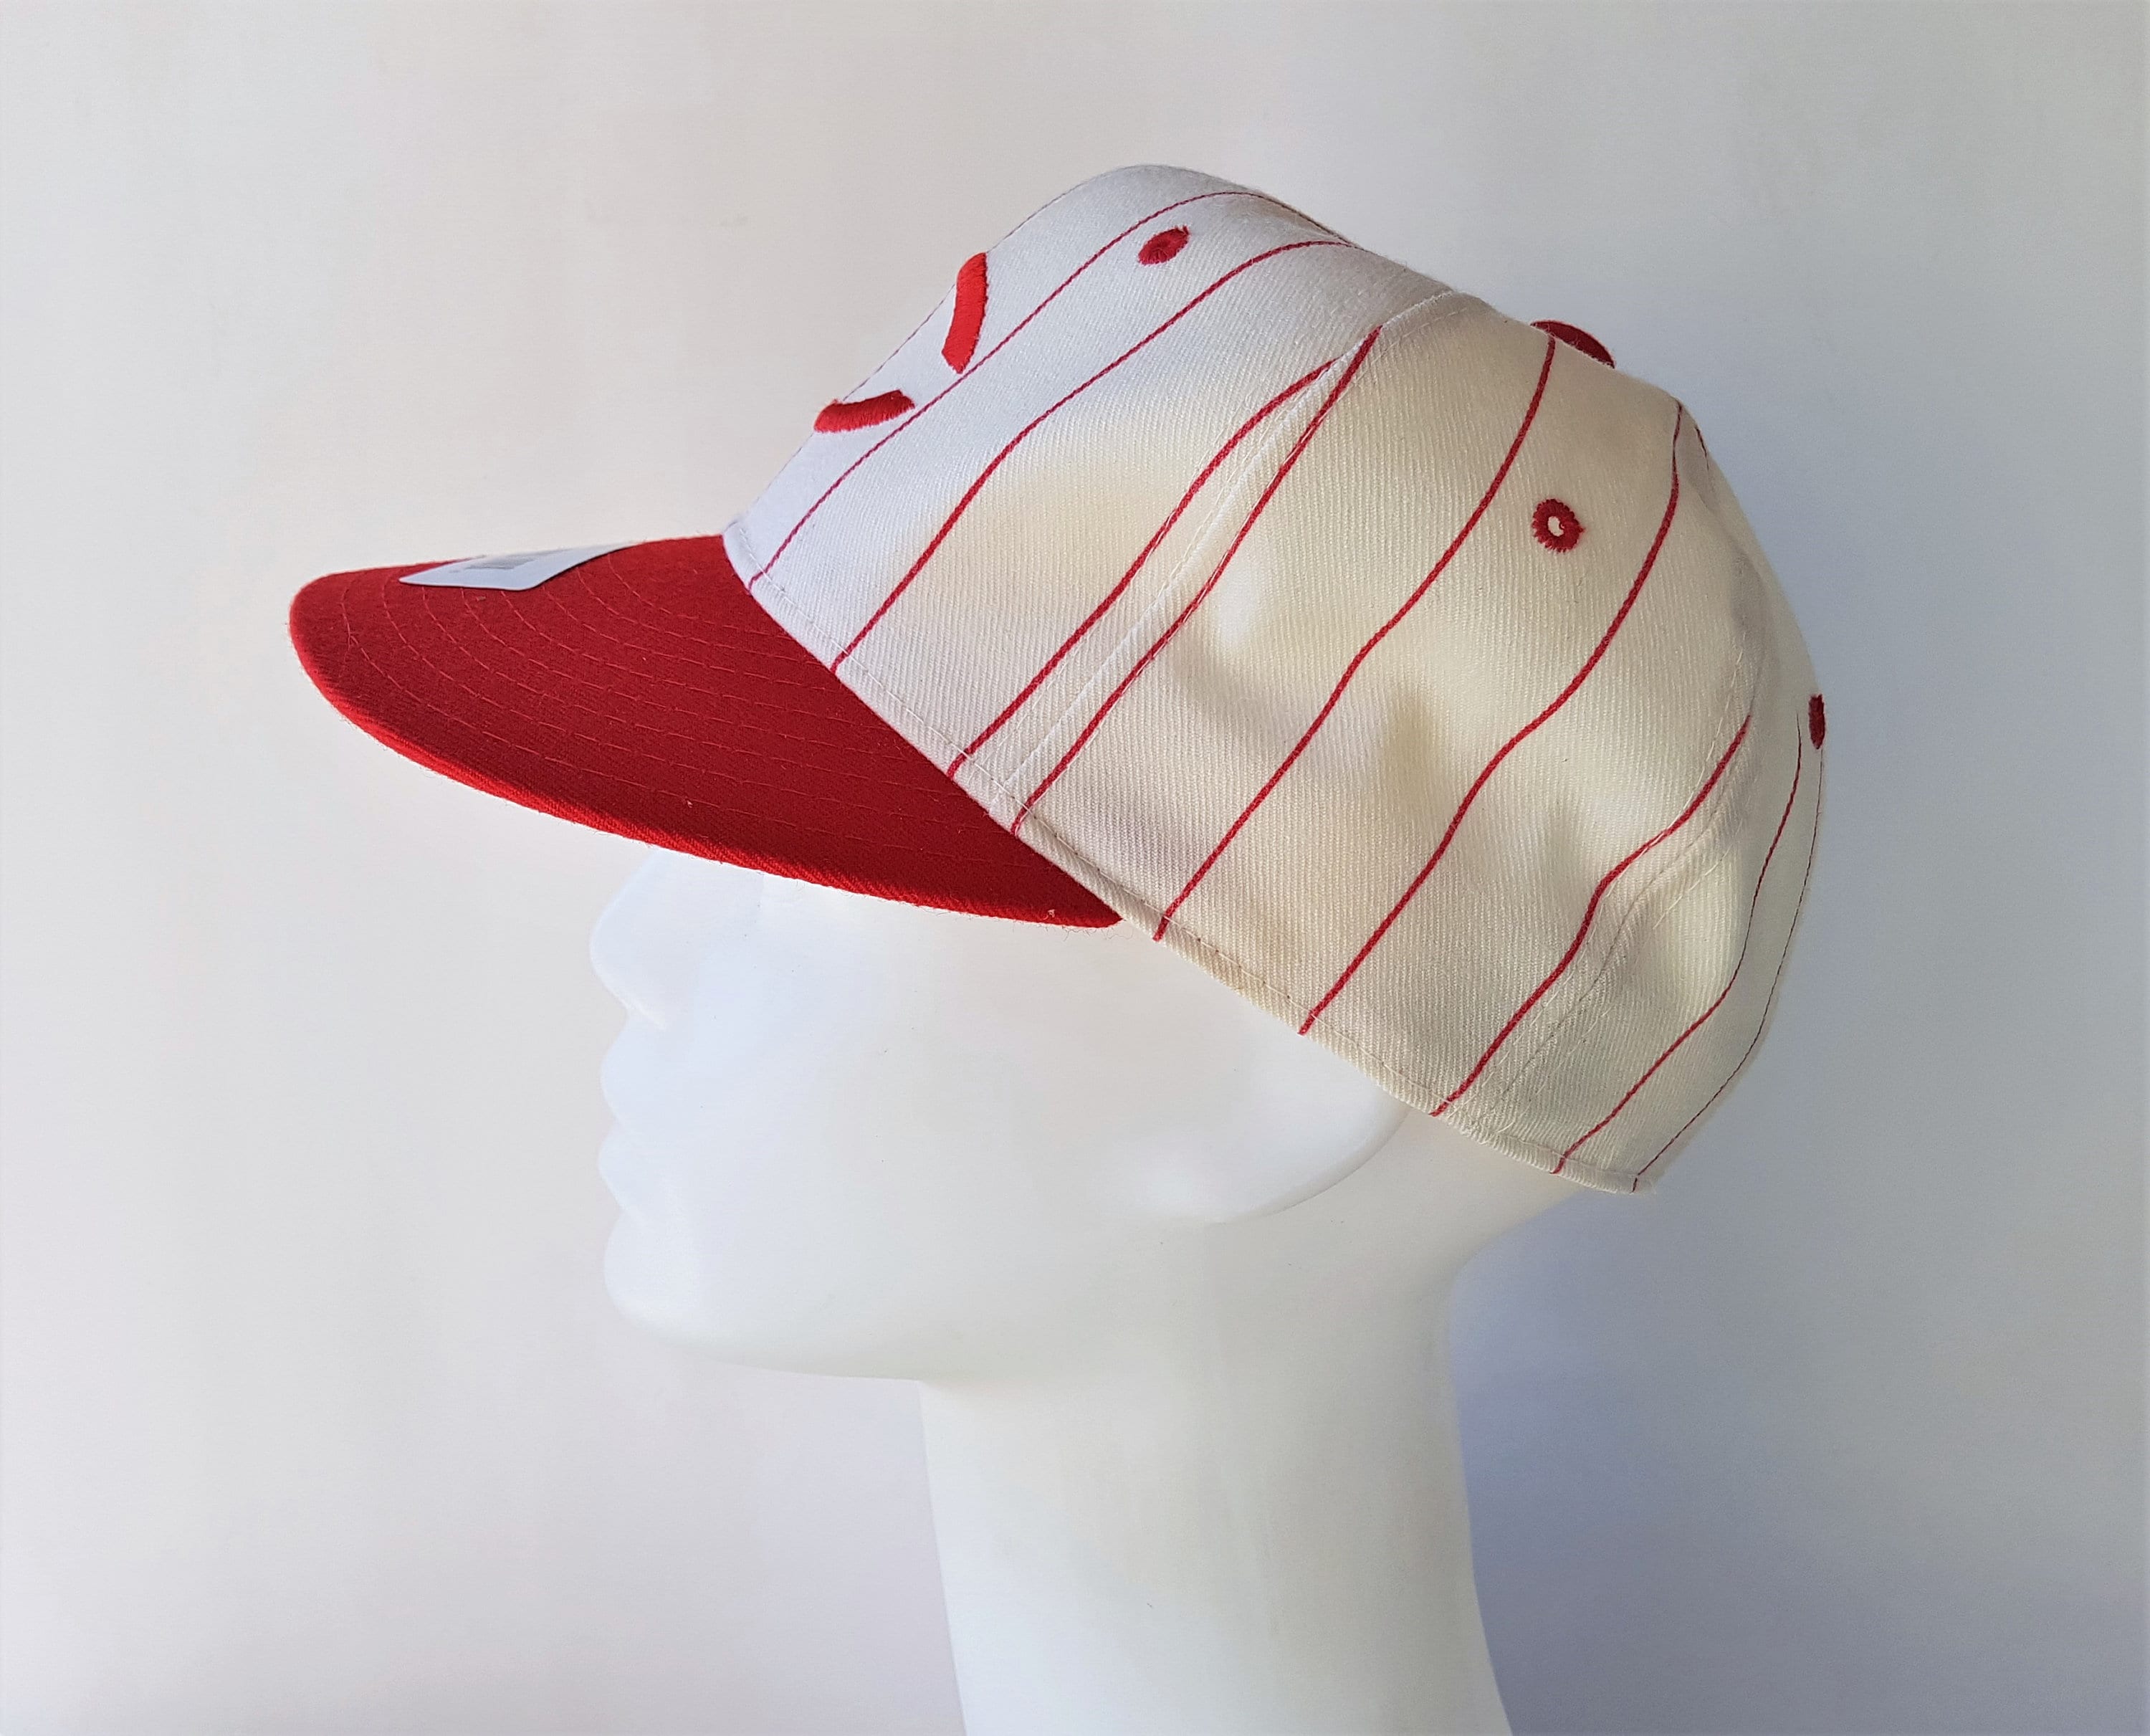 Vintage Cincinnati Reds New Era Diamond Collection 5950 Deadstock Hat Made in USA Size 6 5/8 MLB Pro Model Major League Baseball Cap NOS